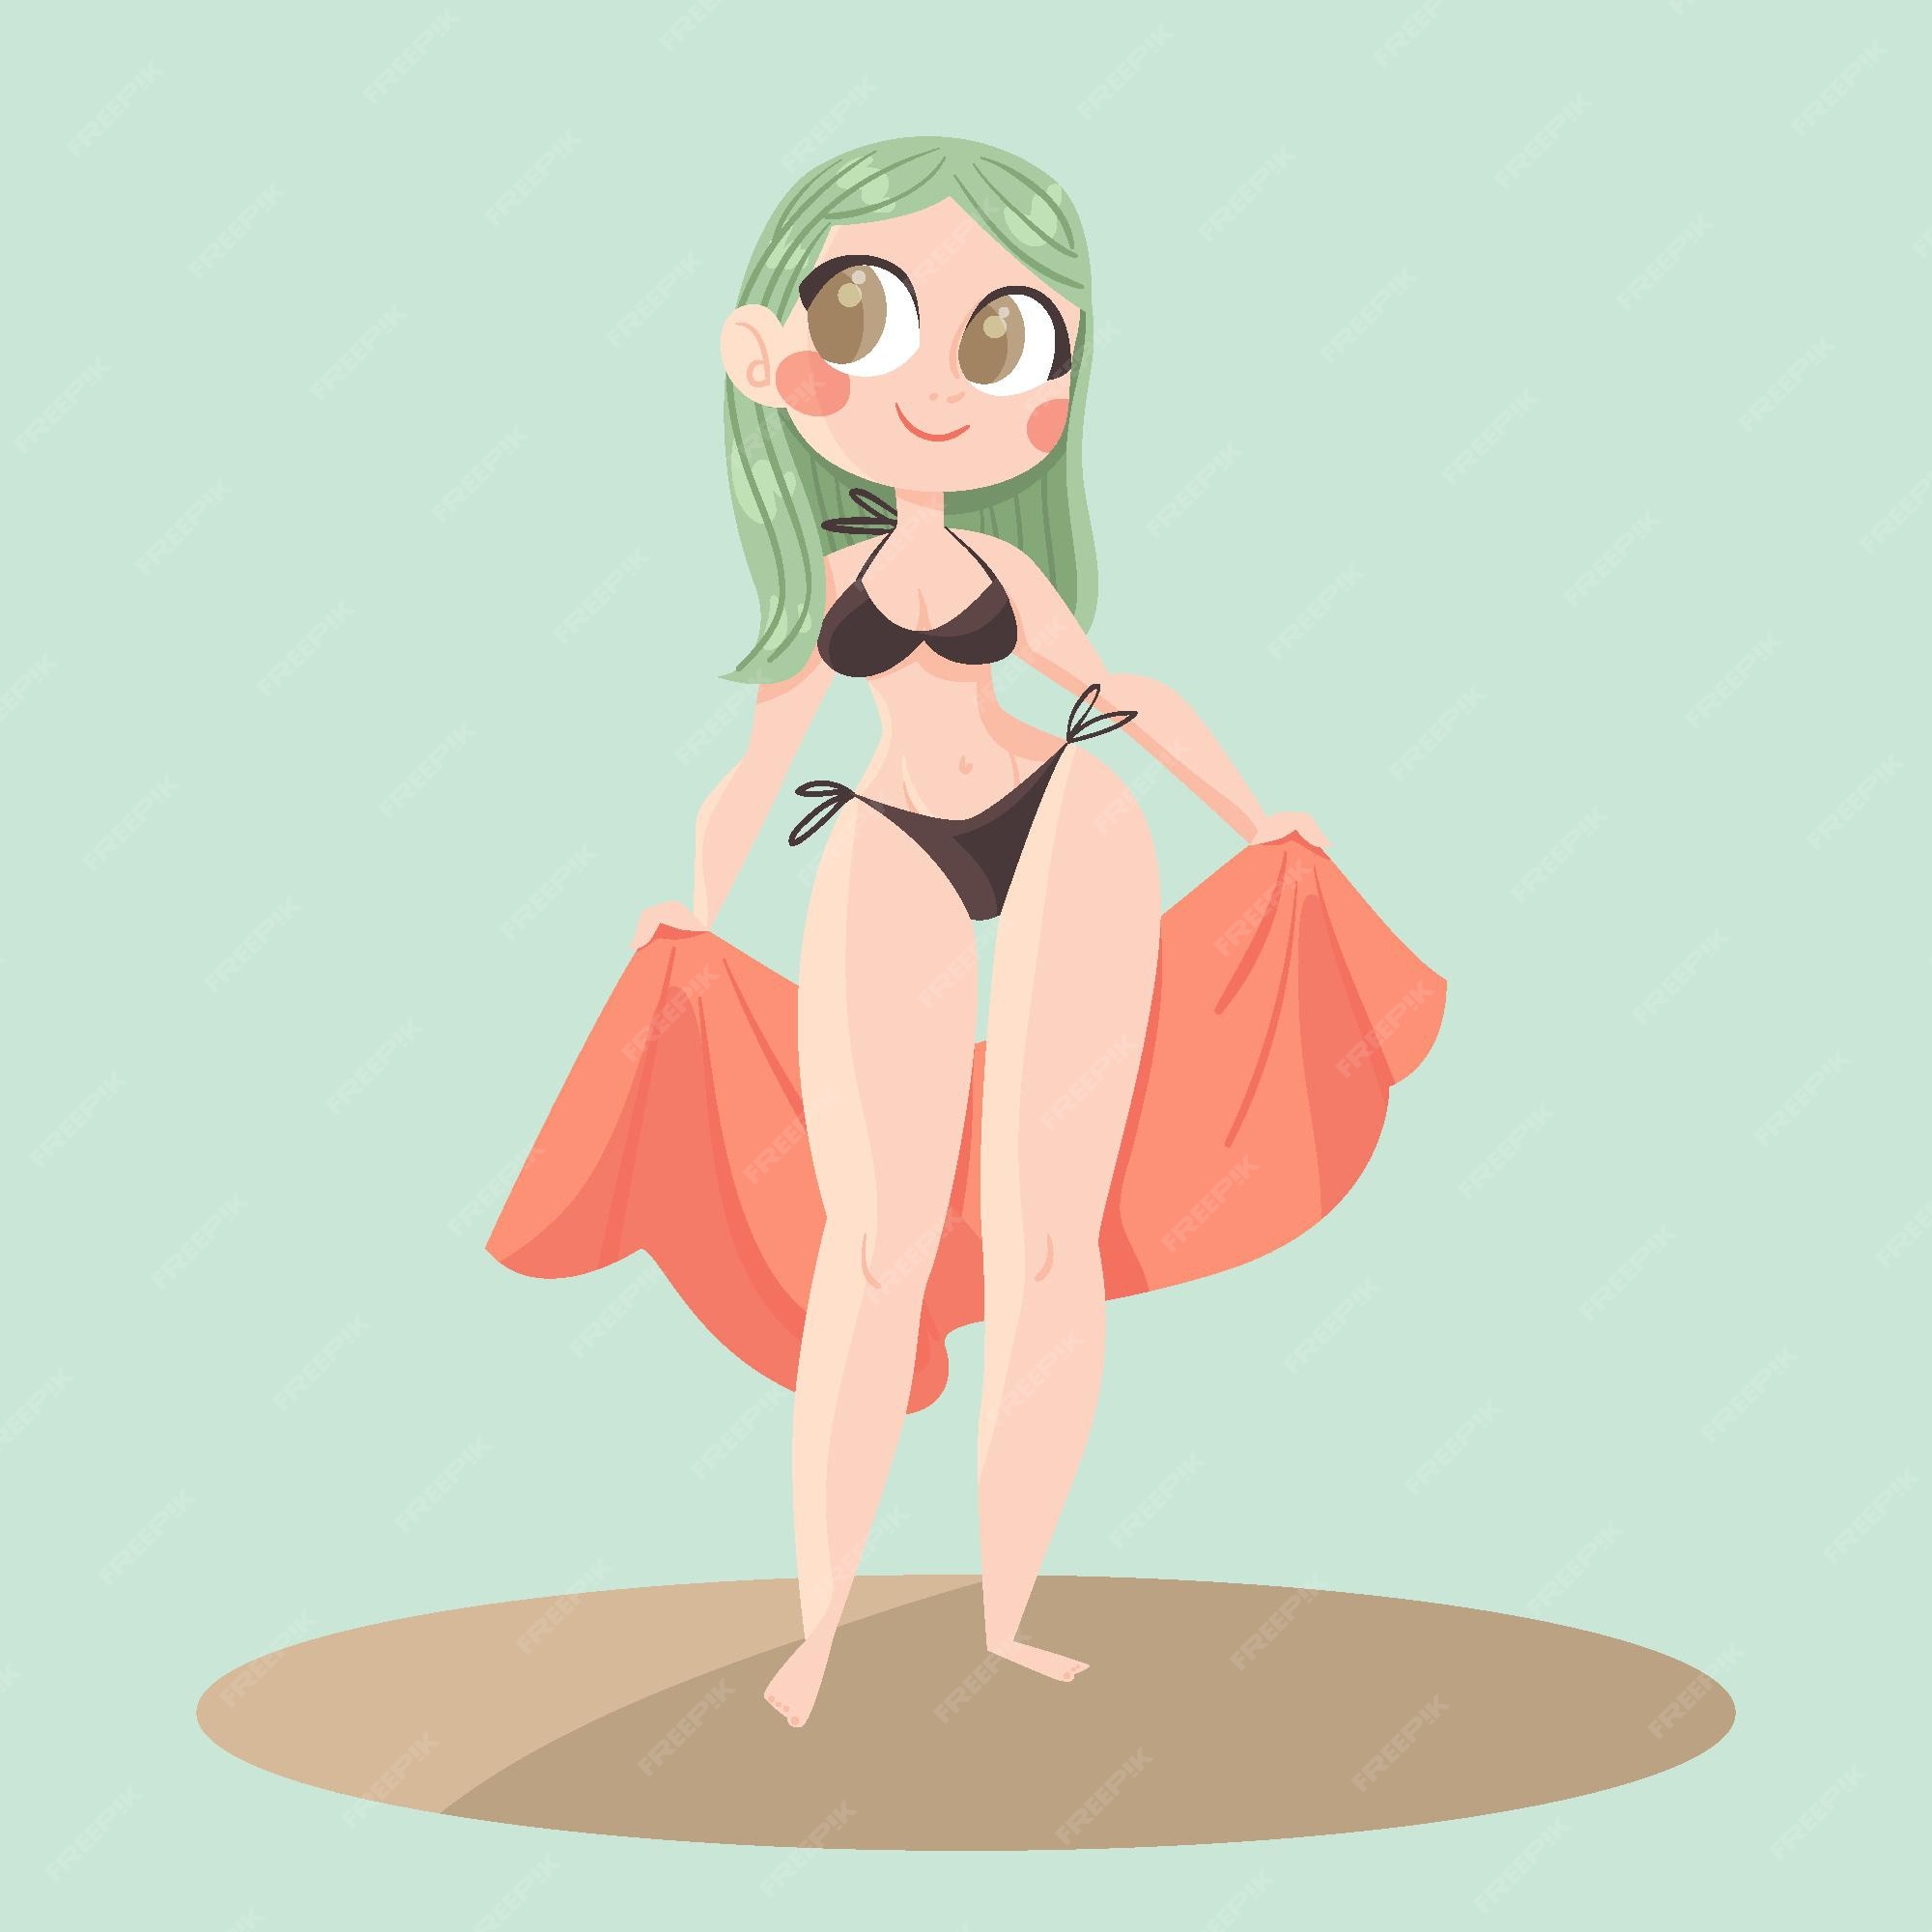 Anime Girl Bikini Images - Free Download on Freepik